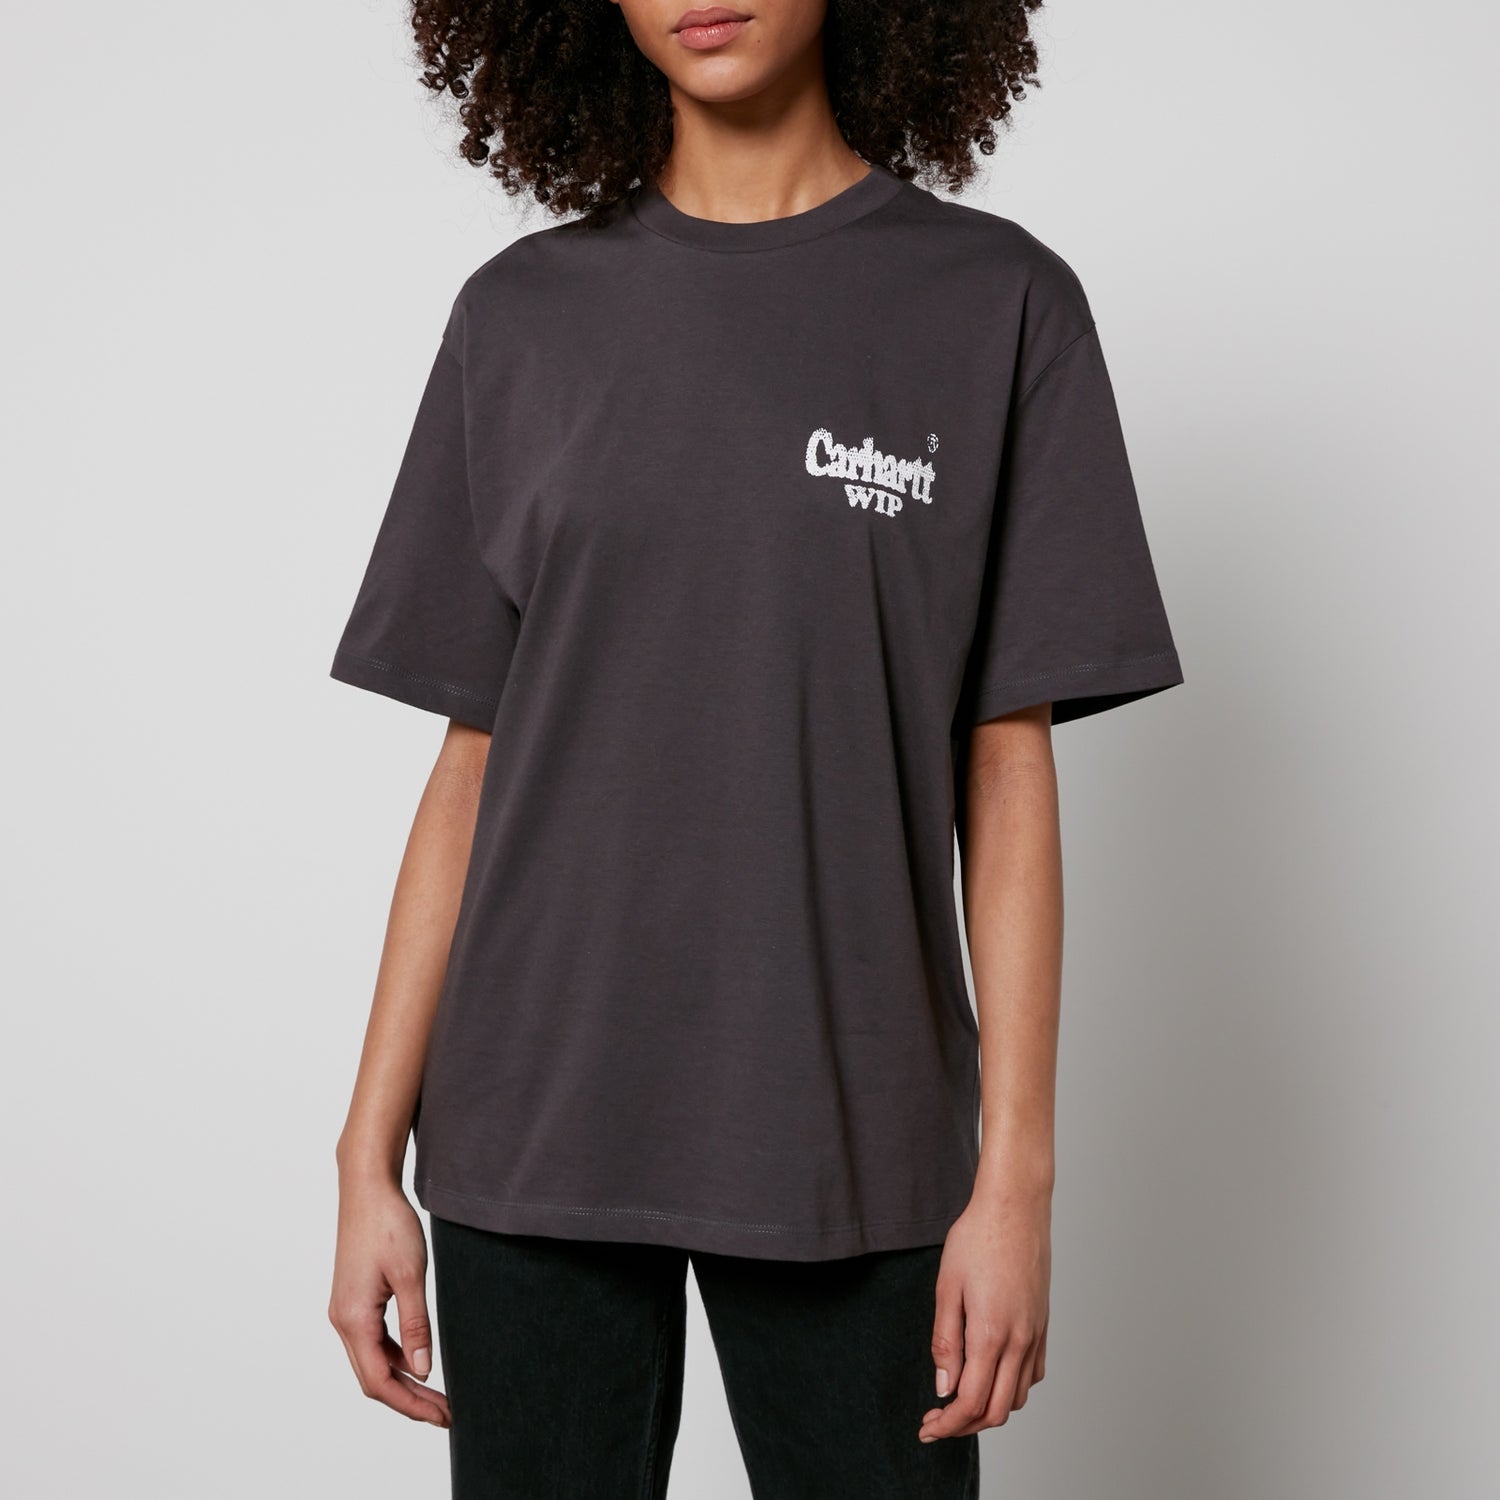 Carhartt WIP Spree Graphic Cotton T-Shirt - S